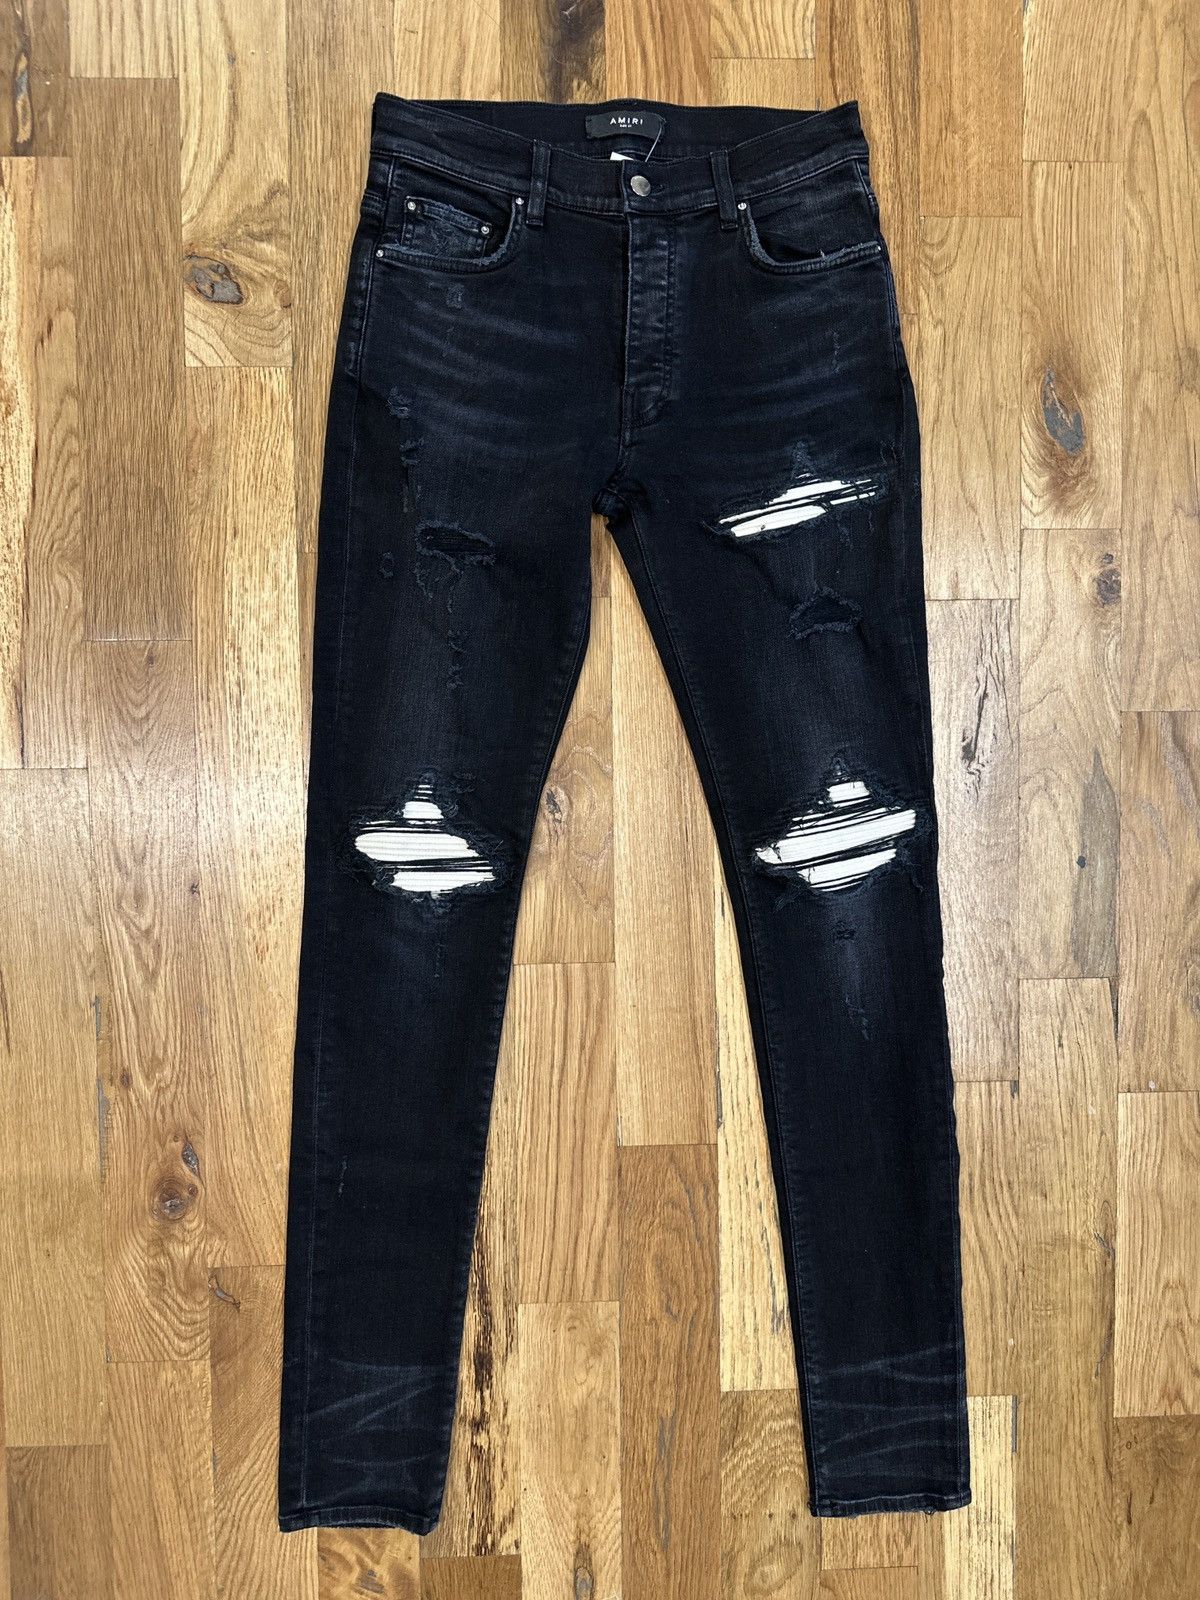 Pre-owned Amiri Mx1 Cream Suede Black Denim Jeans Size 31